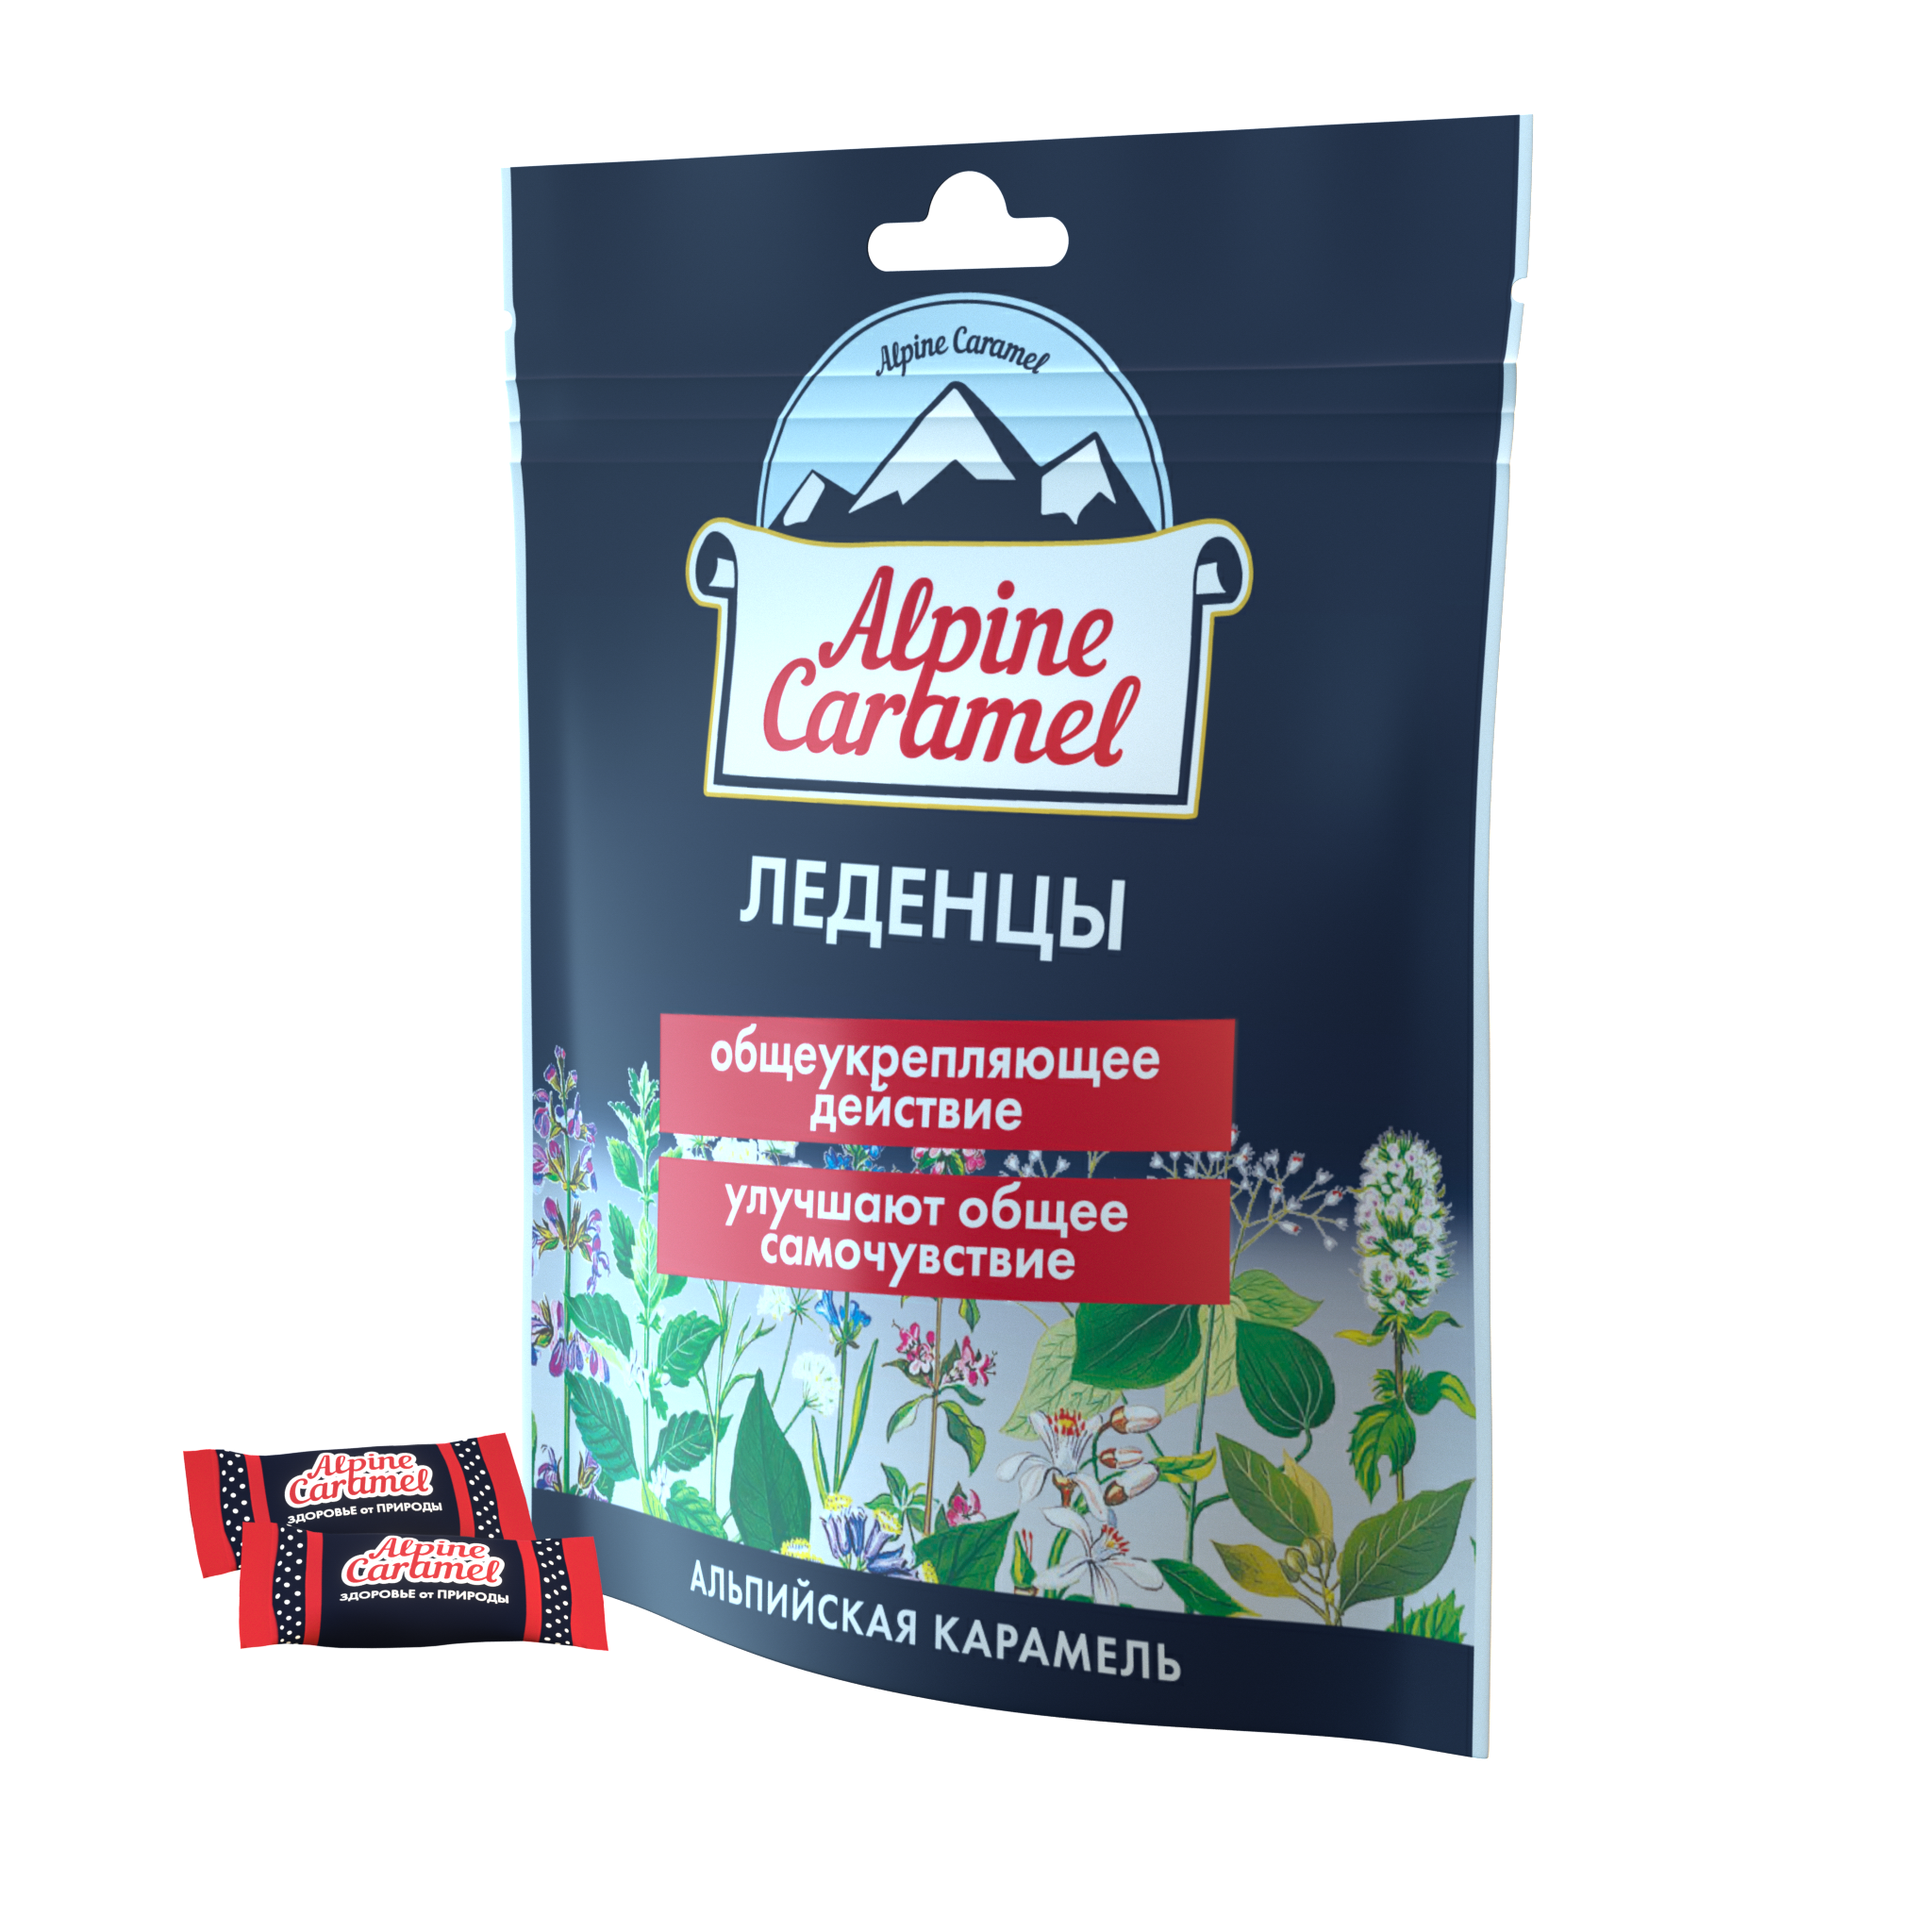 Alpine Caramel Альпийская Карамель леденцы, 75 г alpine caramel альпийская карамель леденцы без сахара 75 г